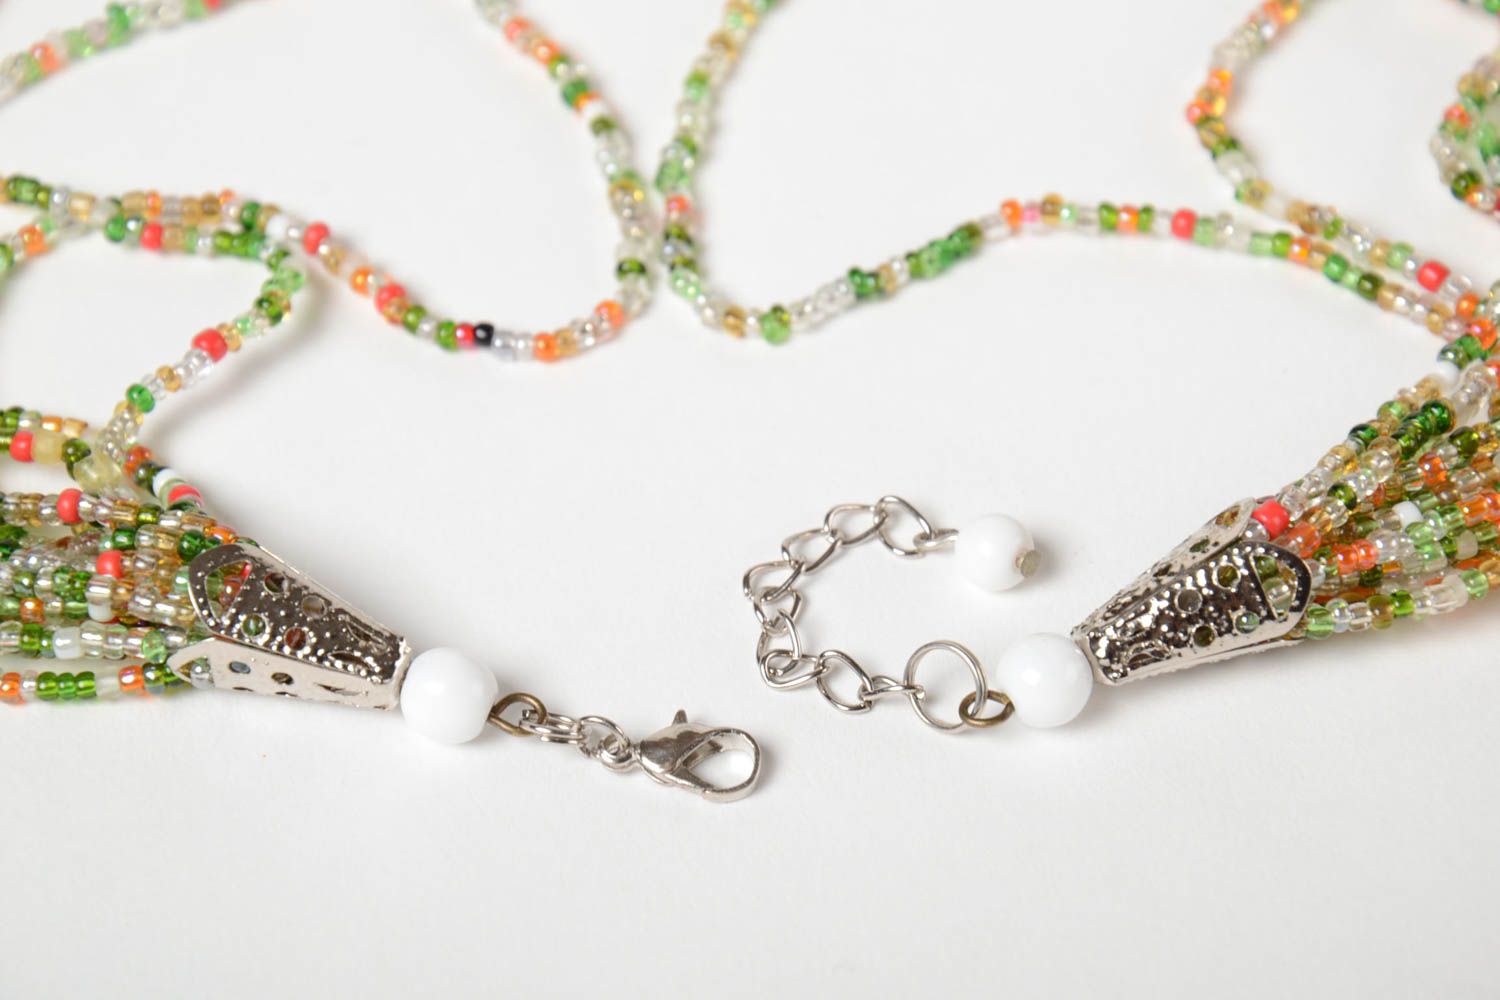 Stylish handmade beaded necklace beautiful necklace designs womens jewelry ideas photo 4